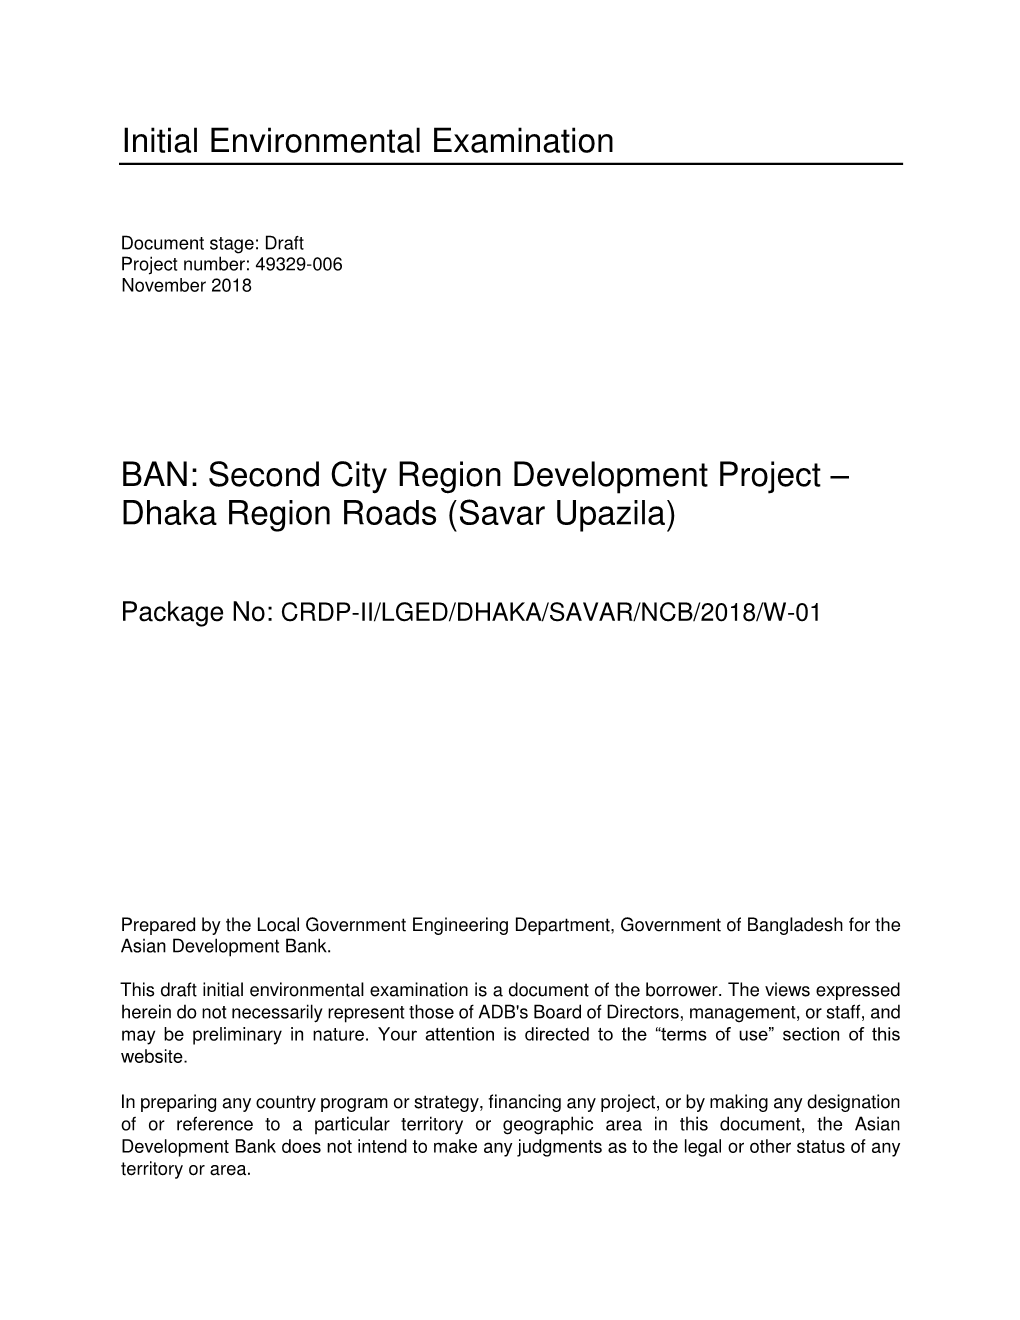 49329-006: Second City Region Development Project